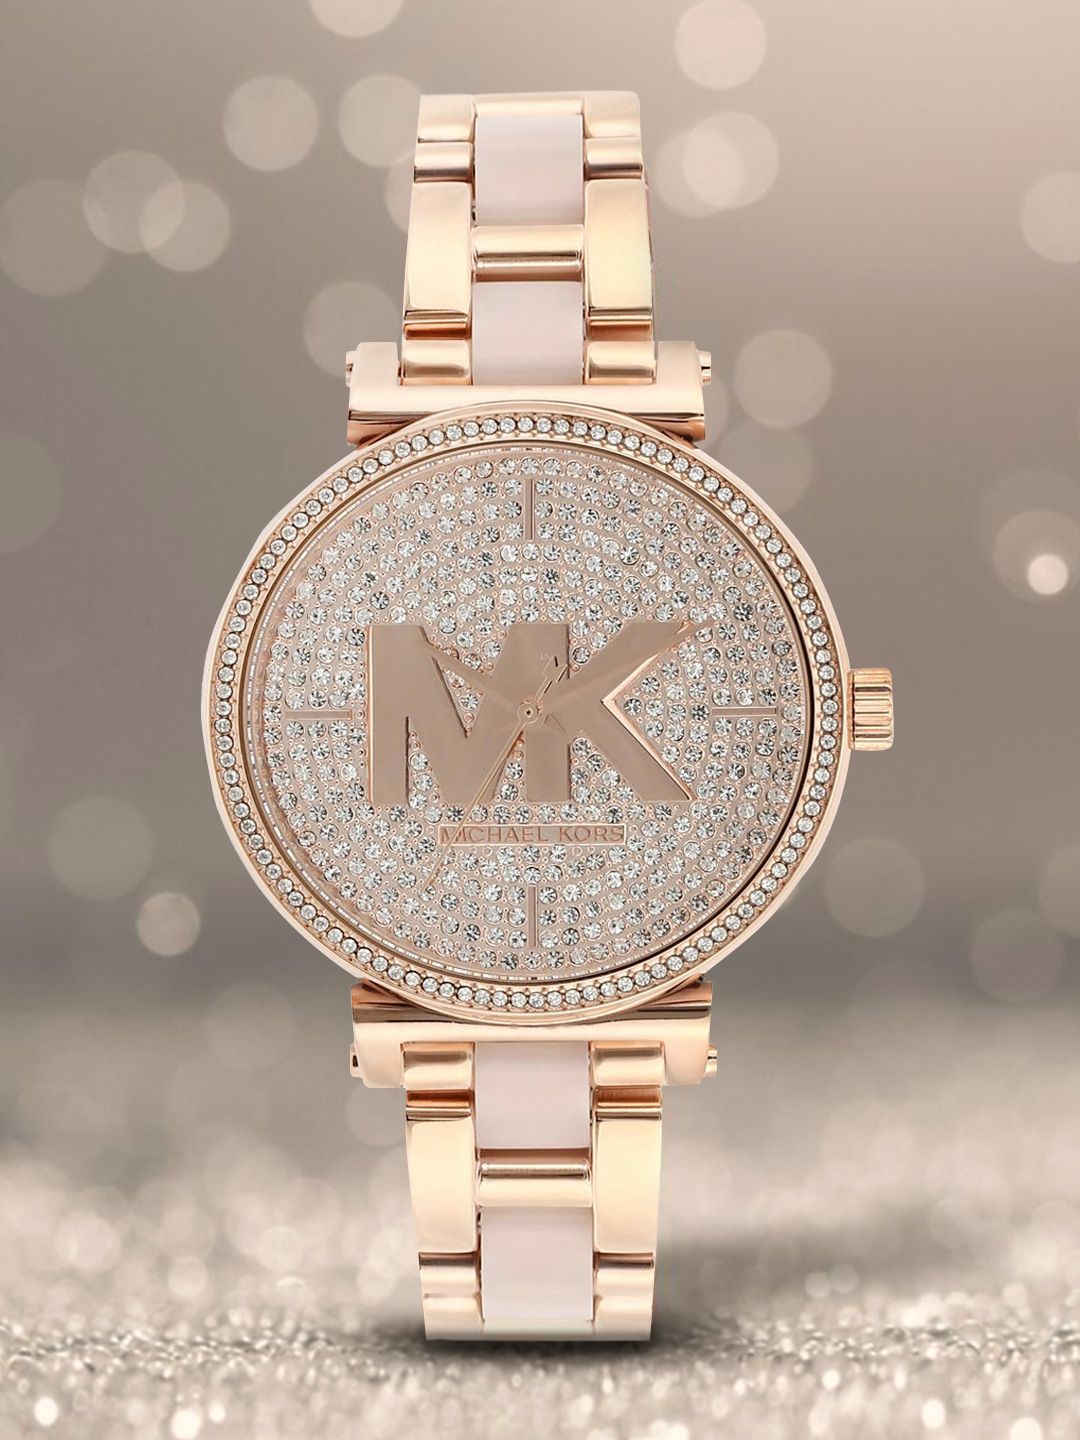 Michael Kors Women Rose Gold Analogue Watch MK4336 Price in India